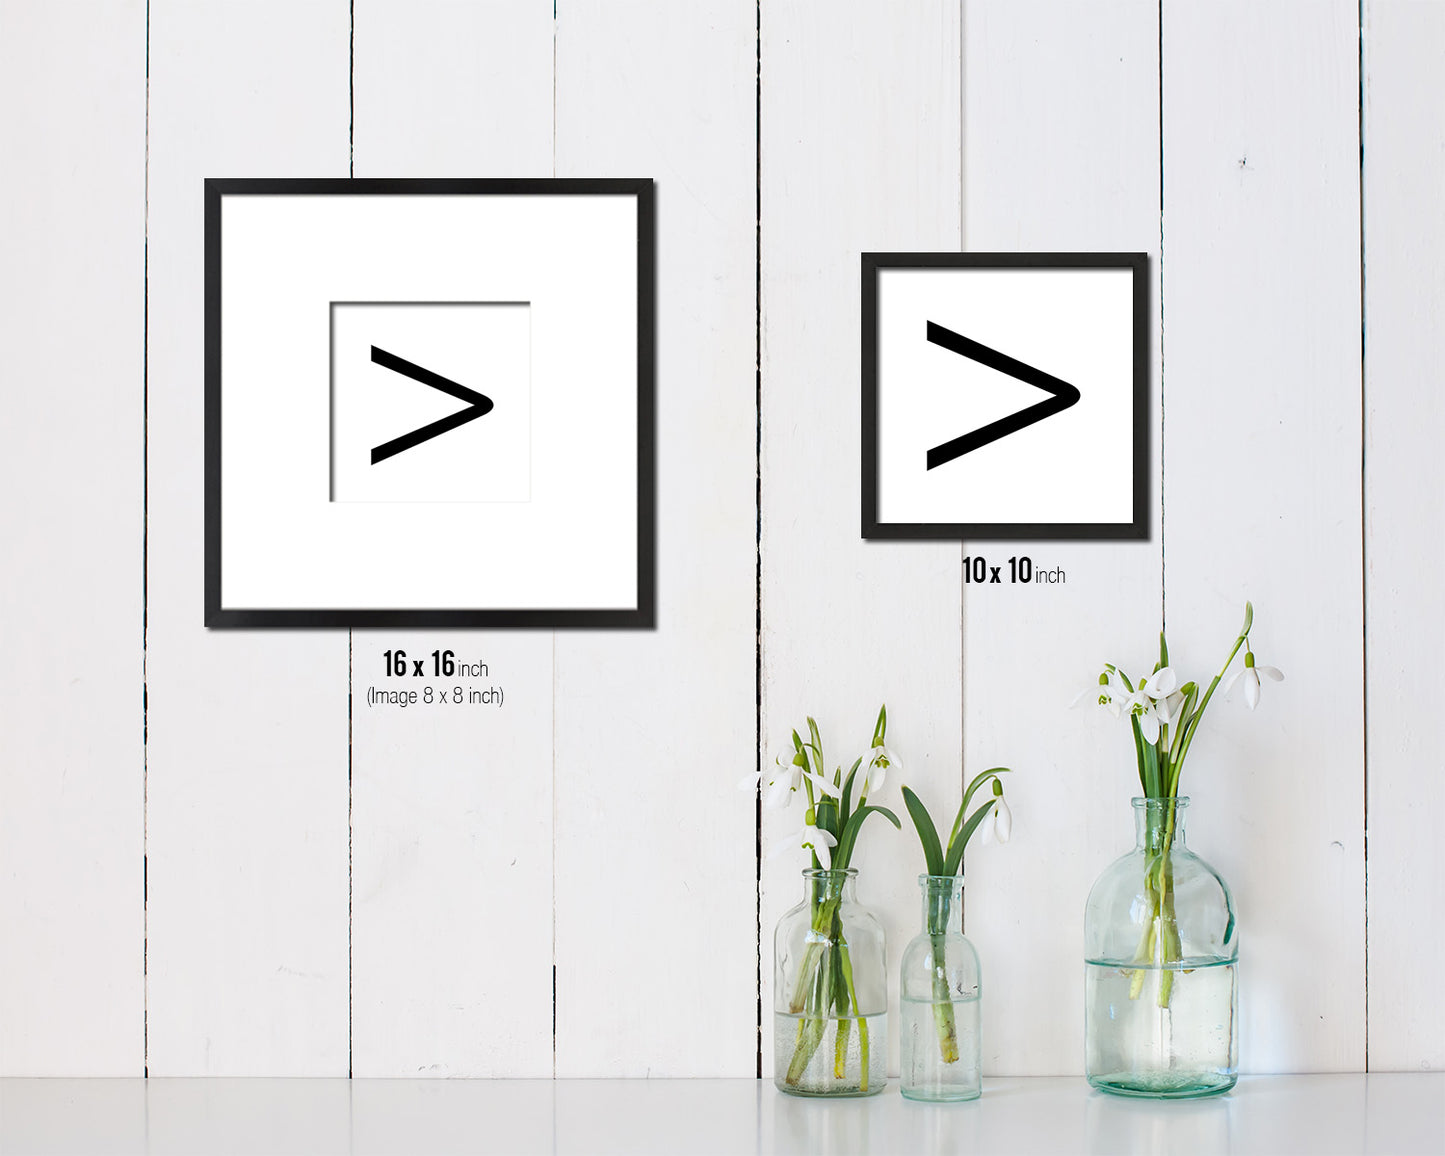 Angle Brackets Close Punctuation Symbol Framed Print Home Decor Wall Art Teacher Gifts